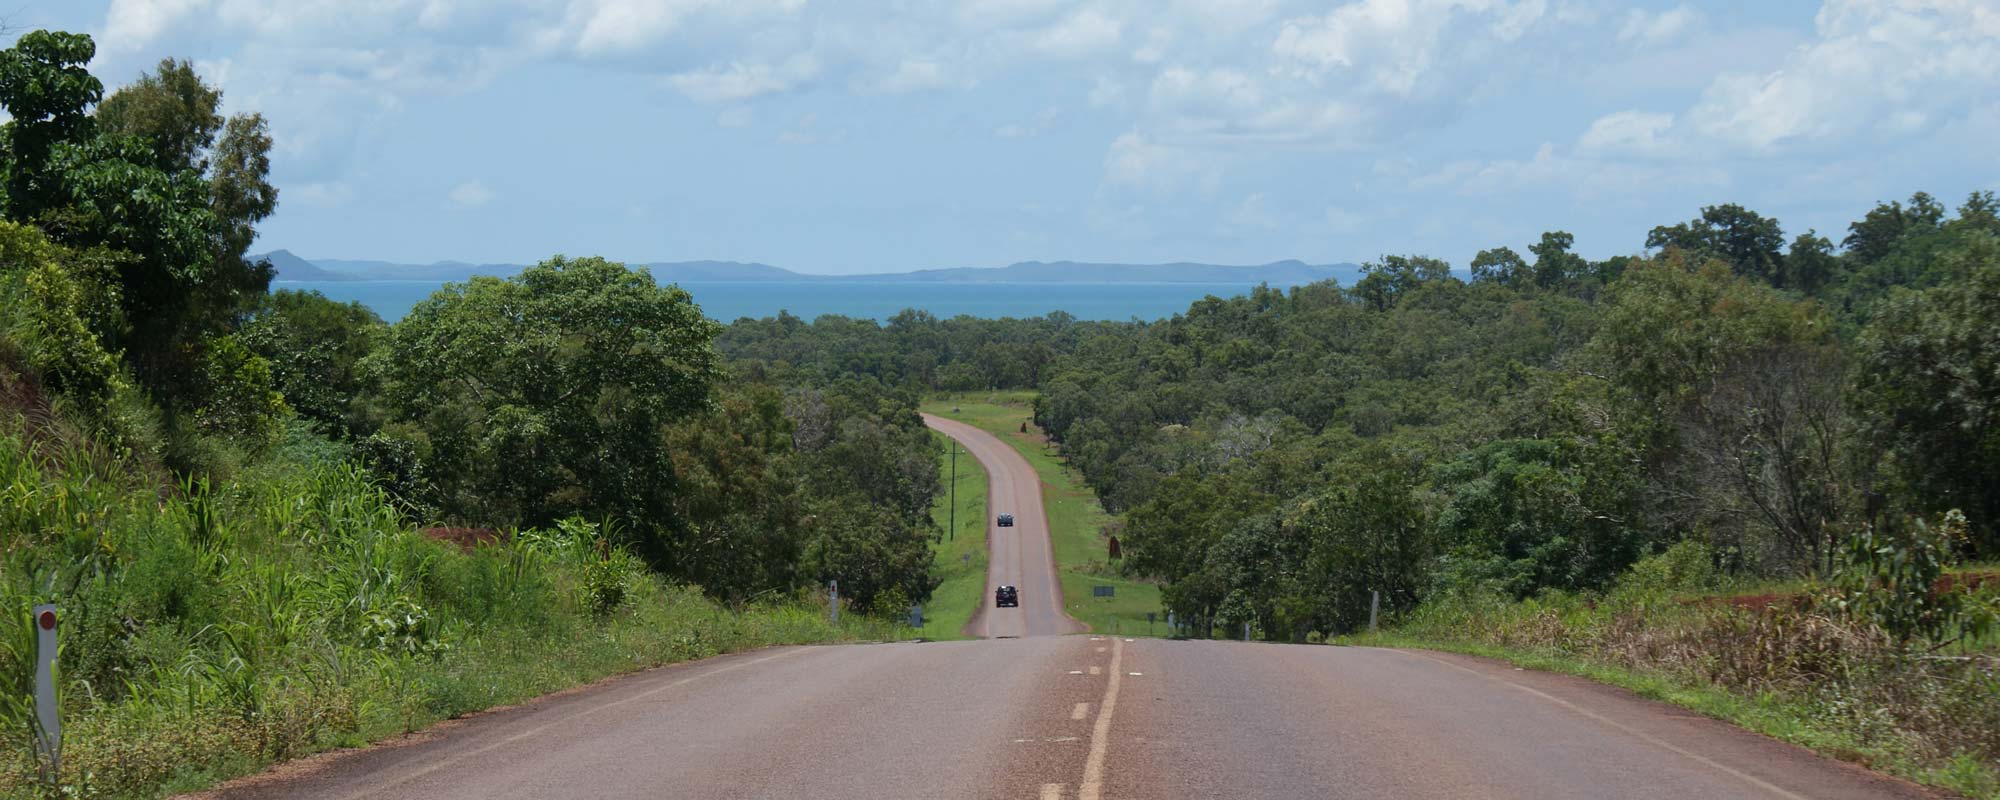 Road to Seisia from Bamaga